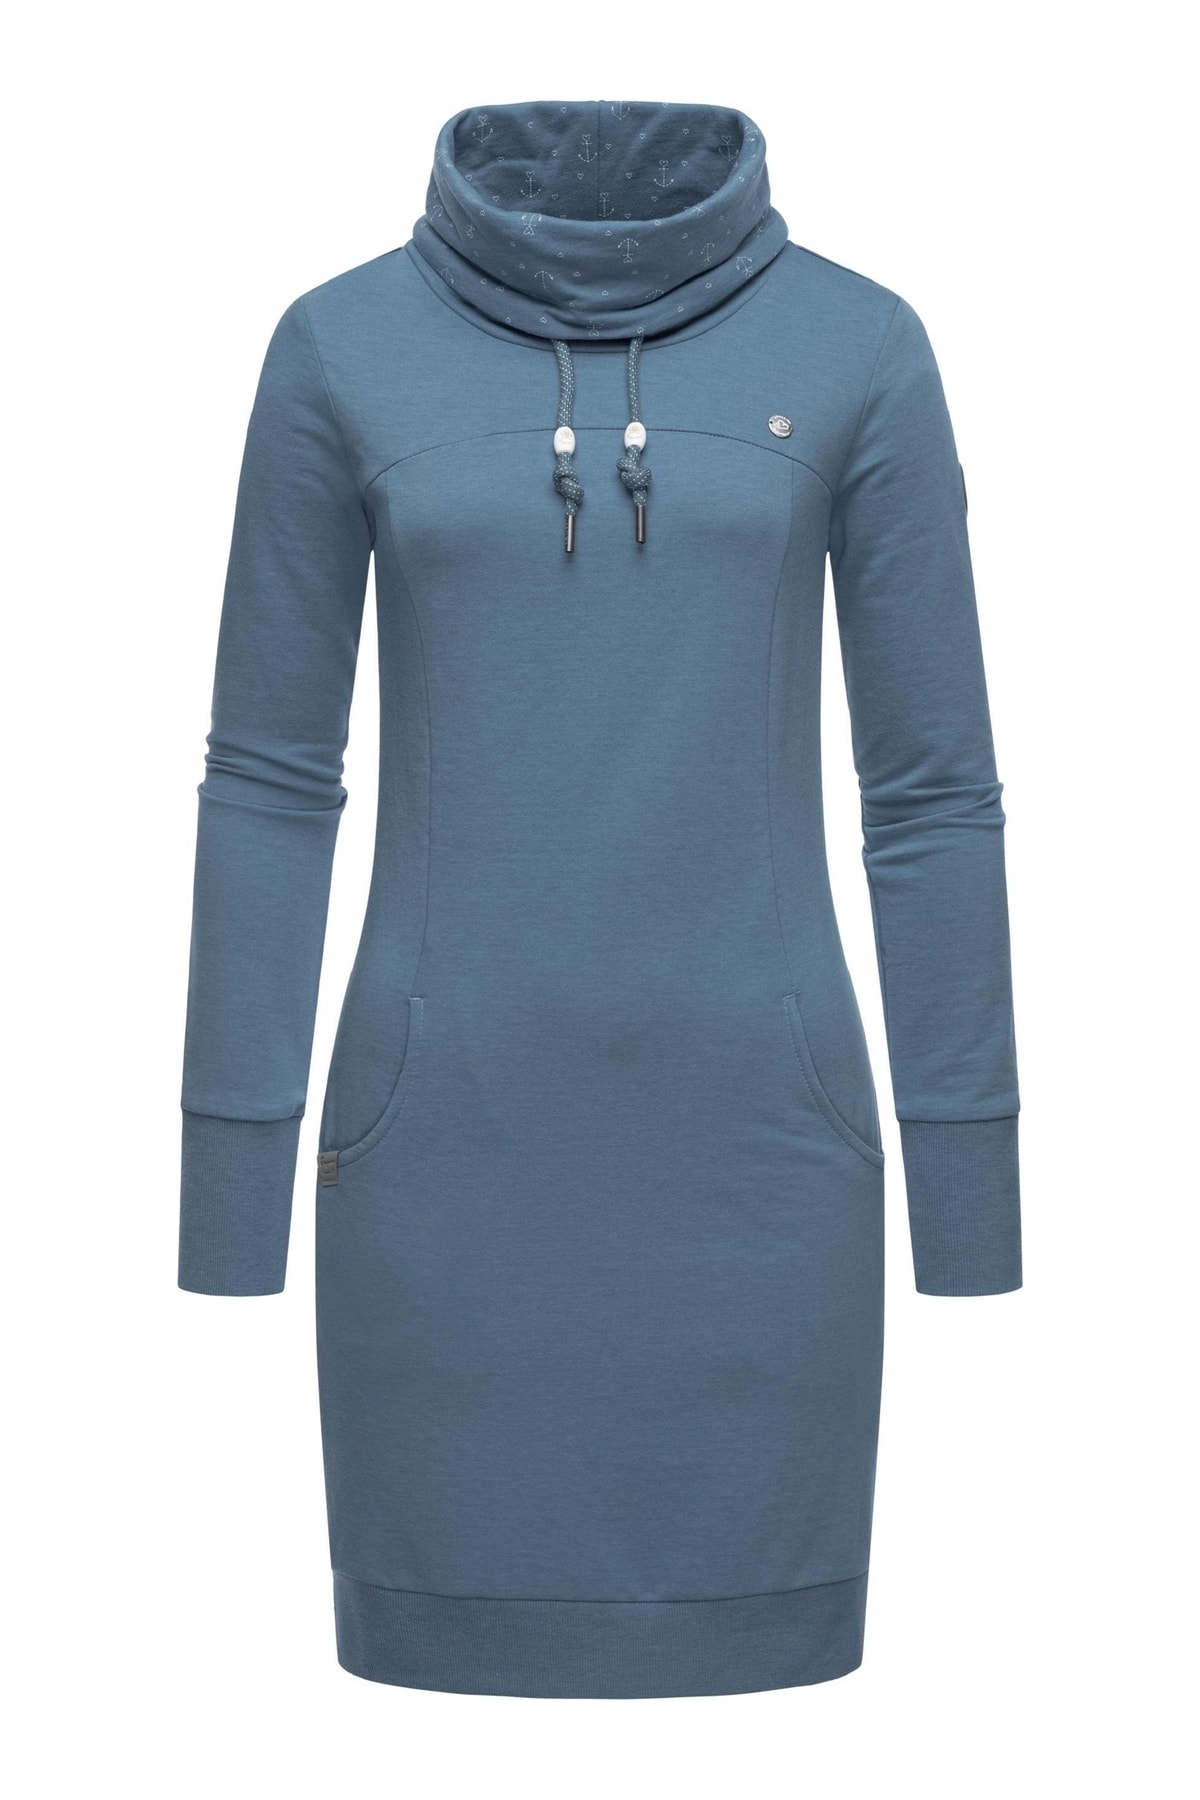 Ragwear Kleid Blau Basic Fast ausverkauft